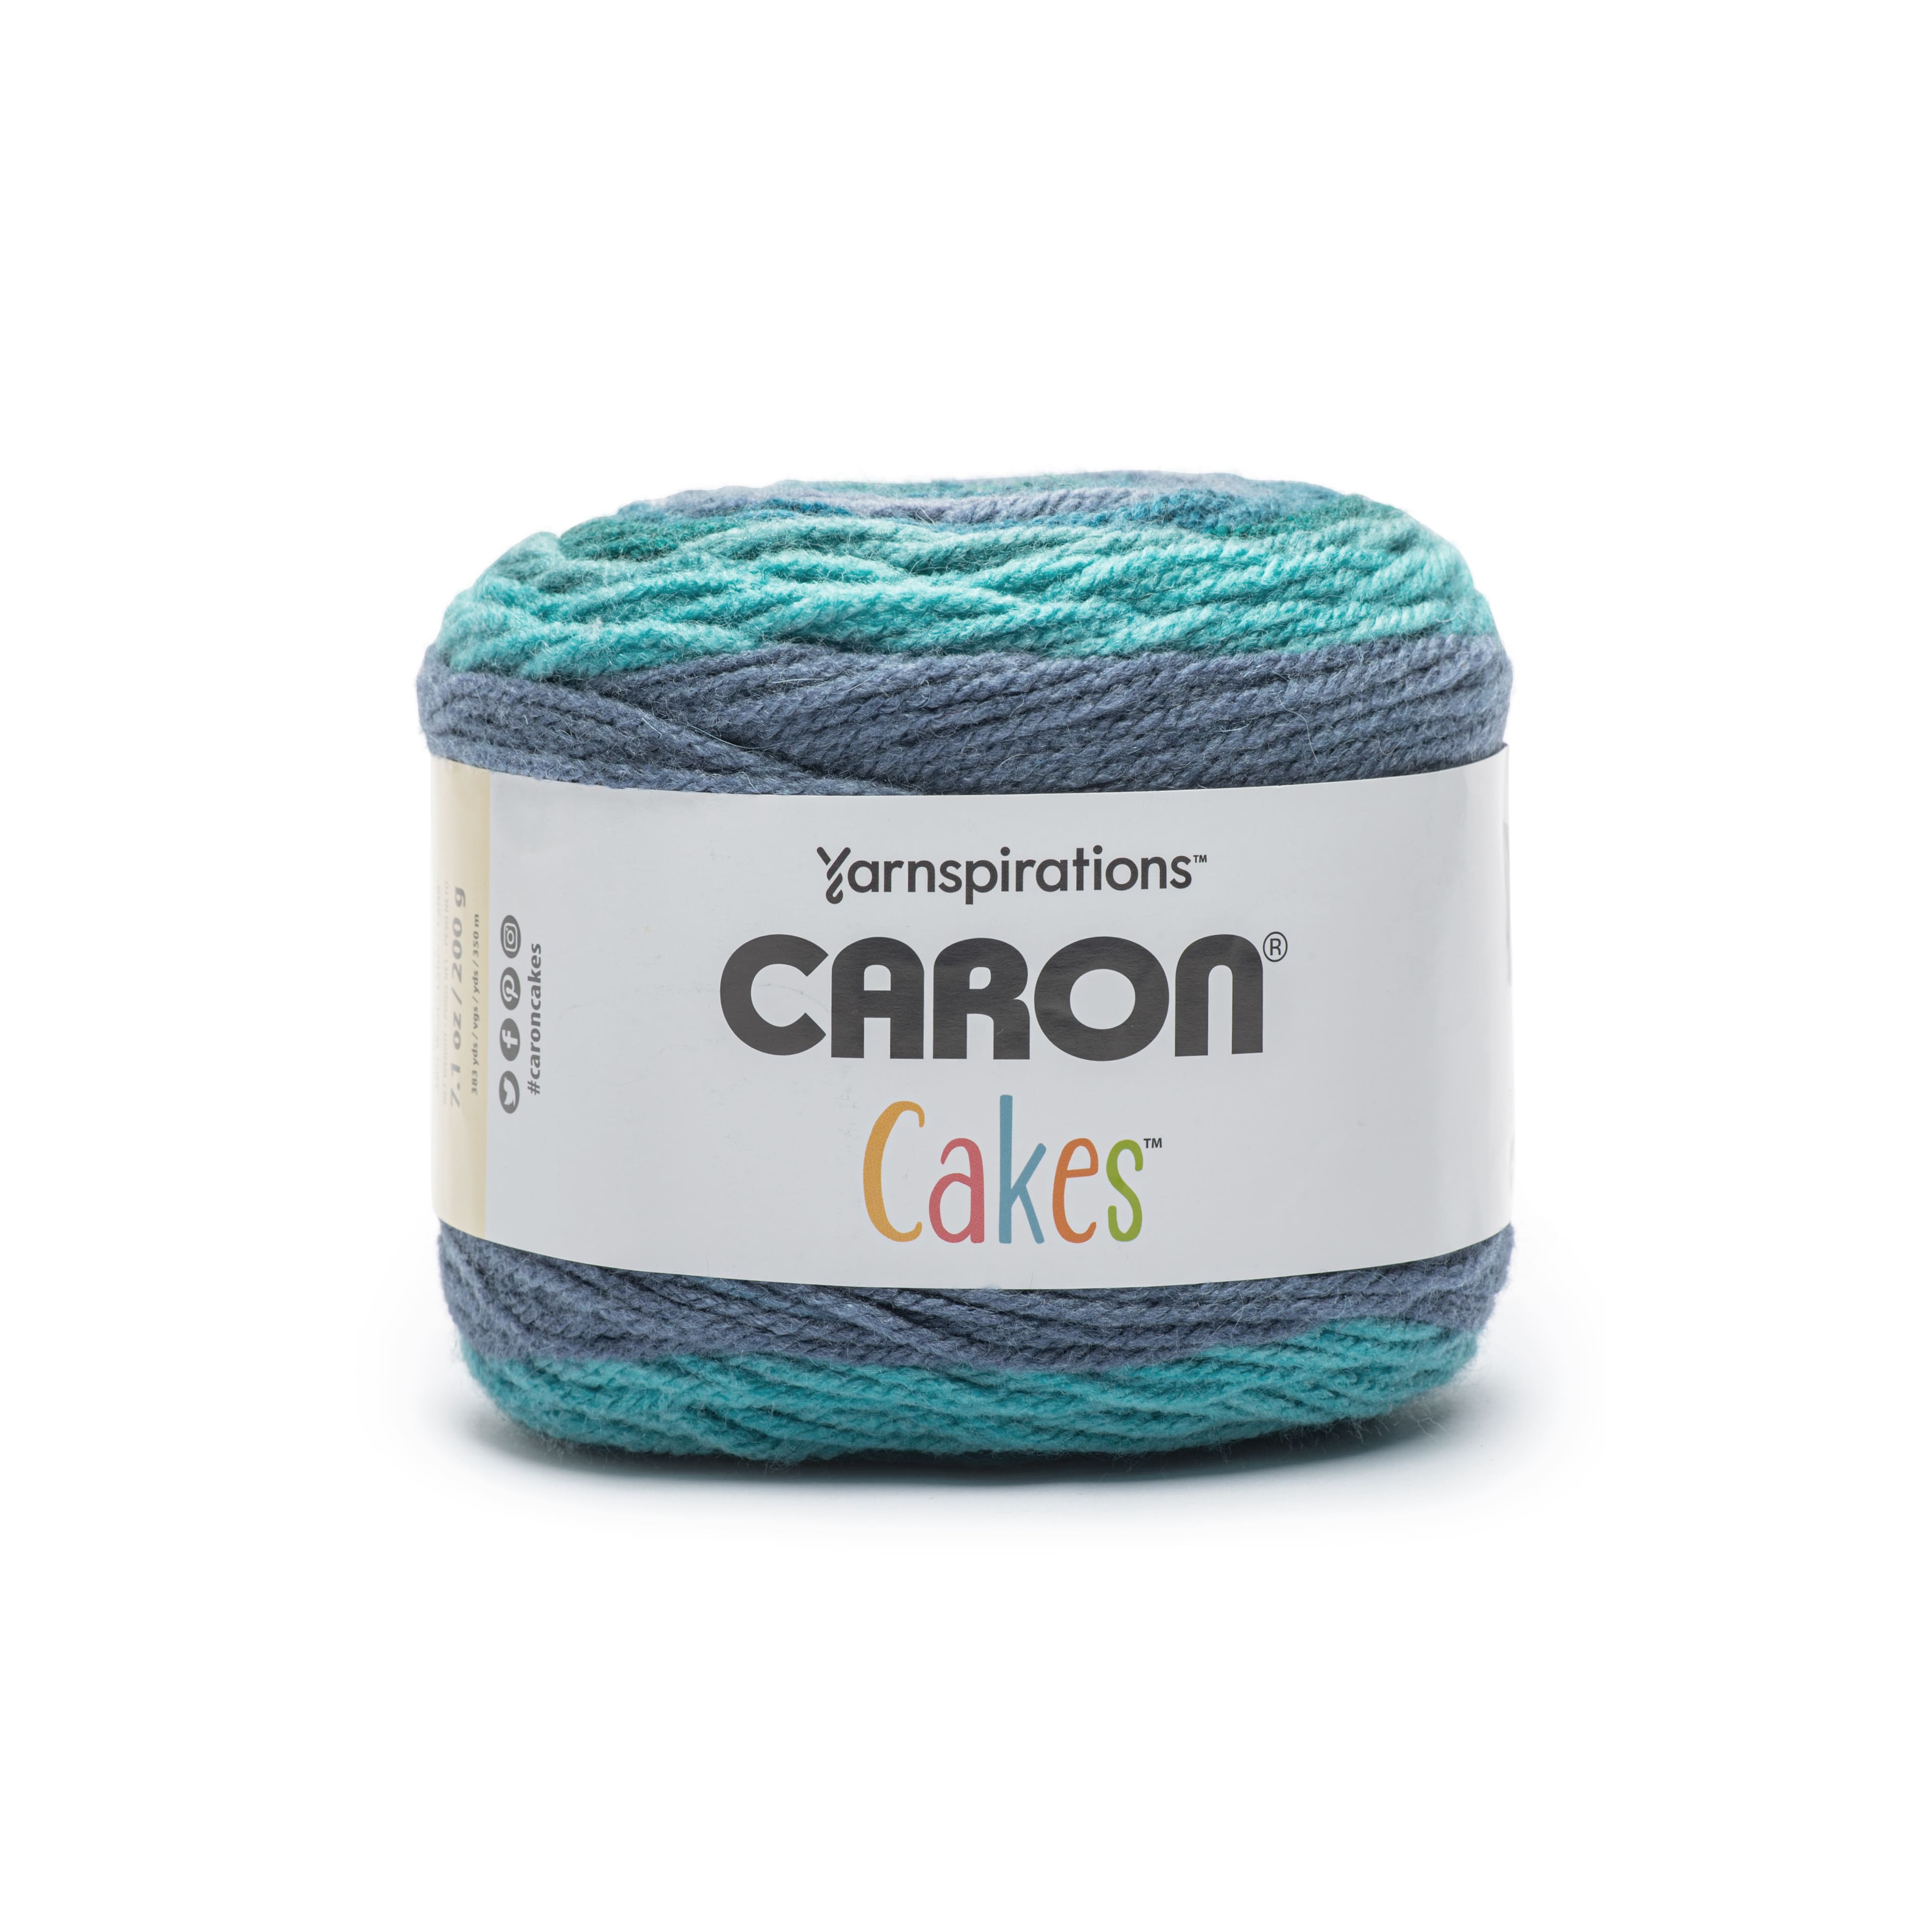 New Caron Cakes Yarn, Yarn Unboxing